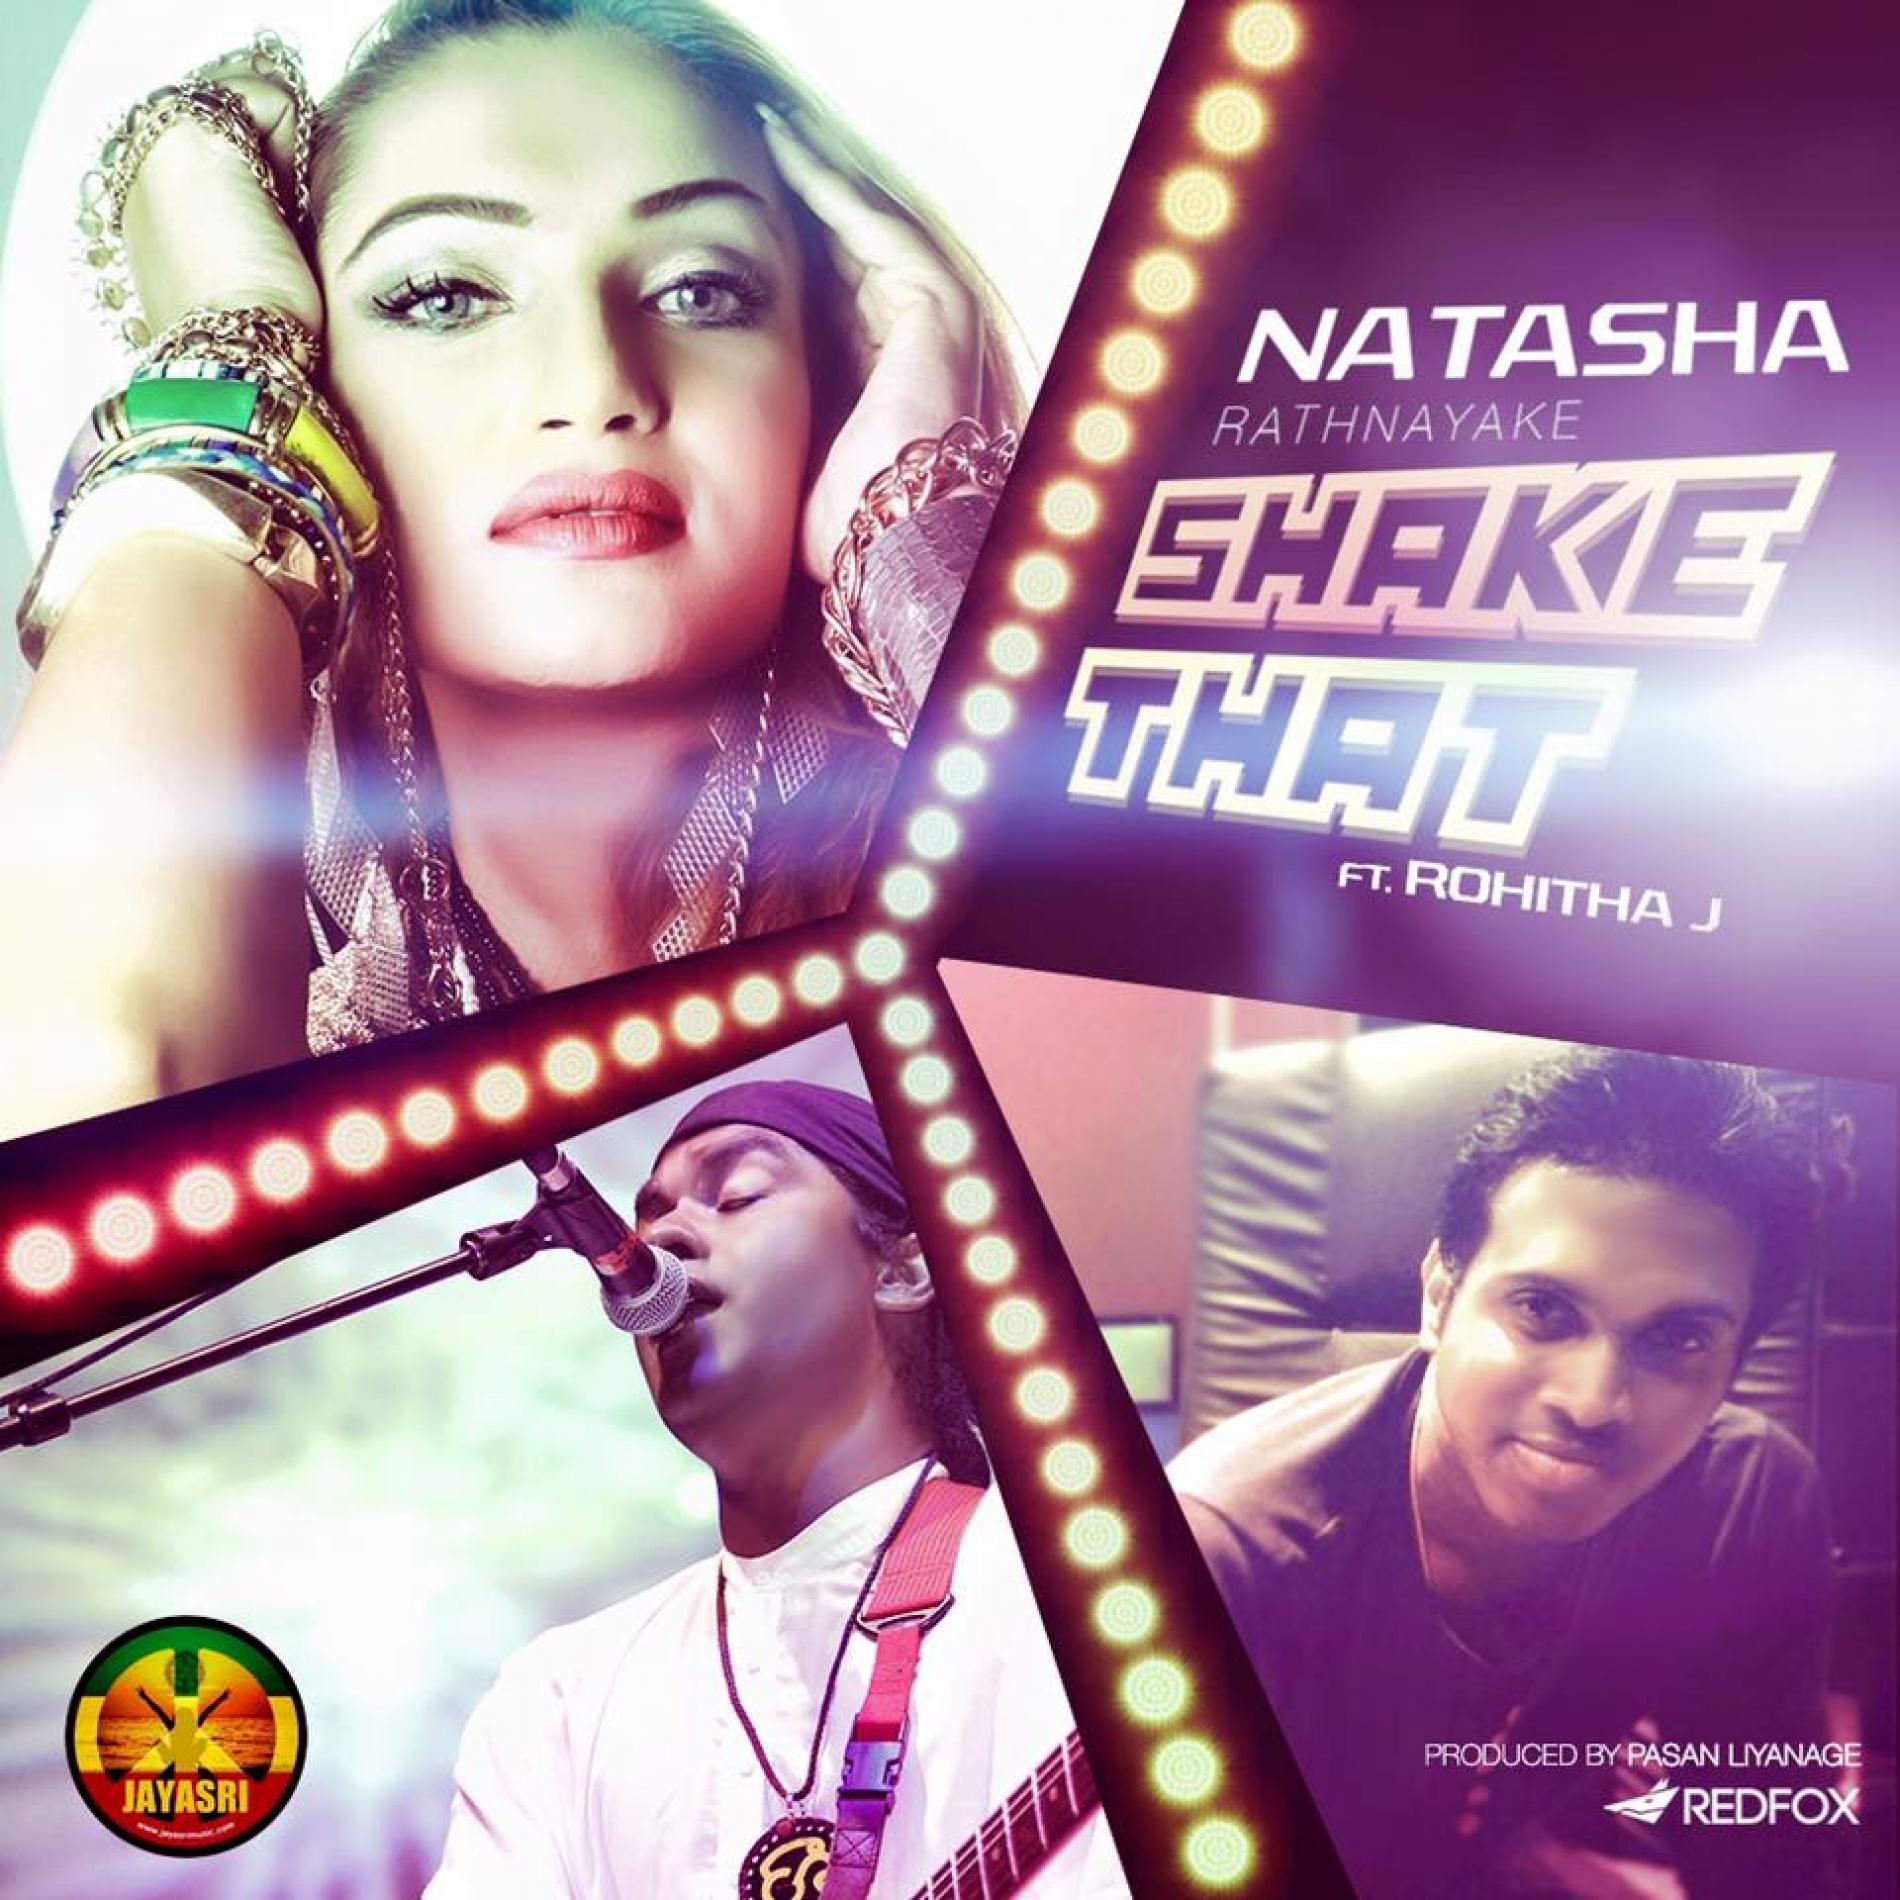 Natasha Rathnayaka Ft Rohitha J – Shake That